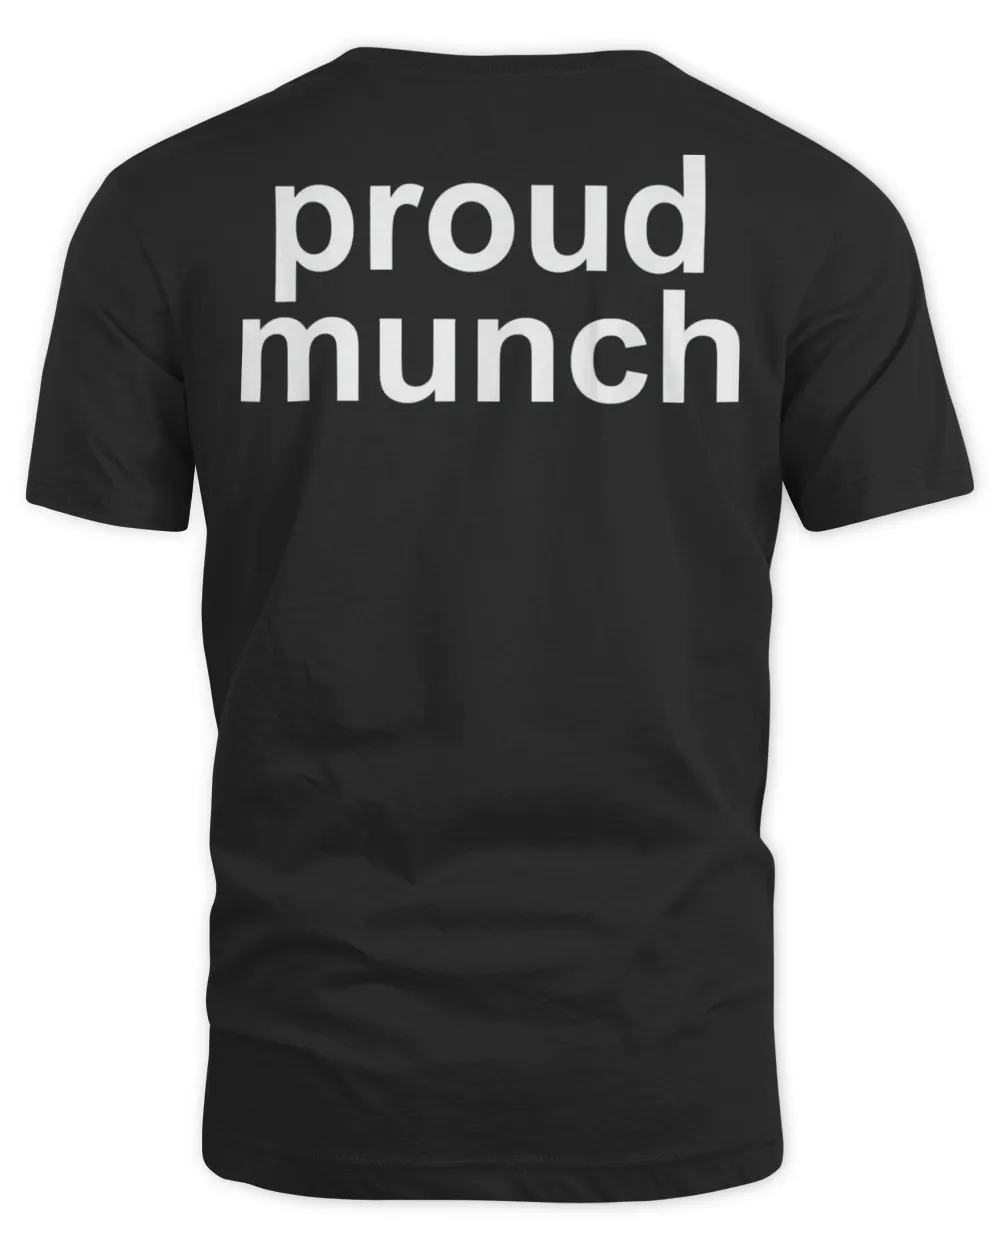 Proud Munch T-Shirt